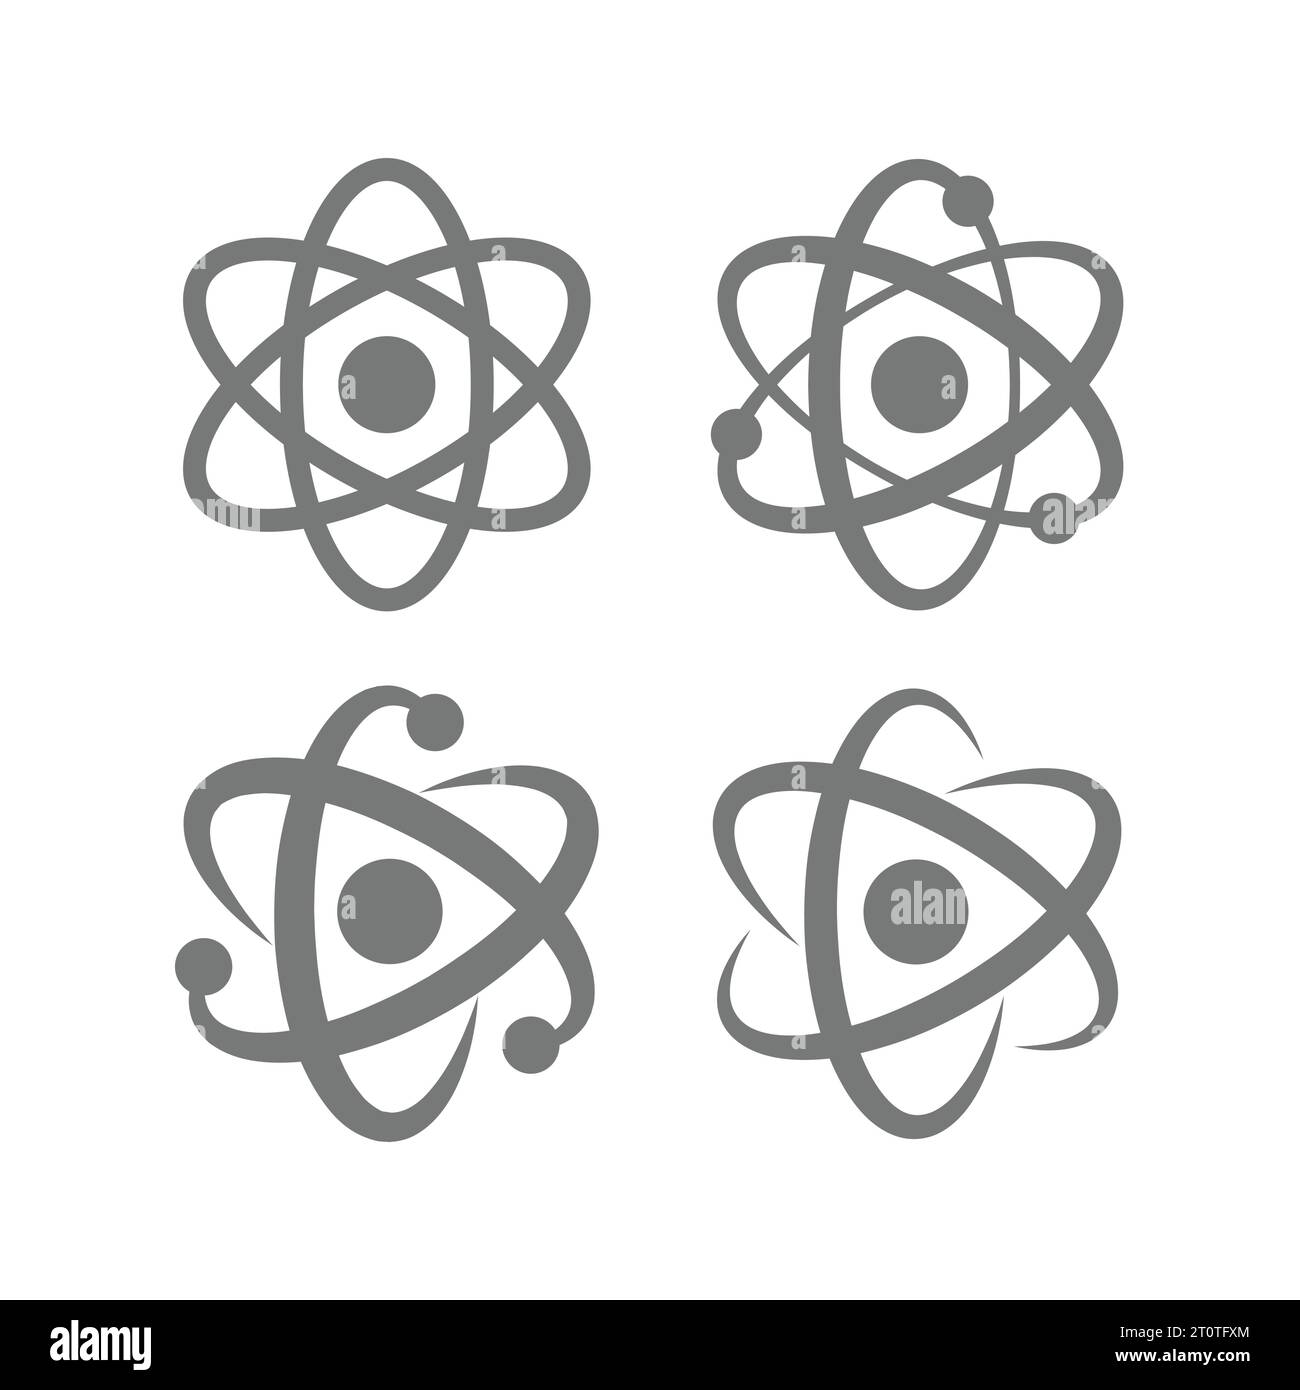 Atom-Vektorsymbol. Molekül-Symbol der Wissenschaft und Physik. Stock Vektor